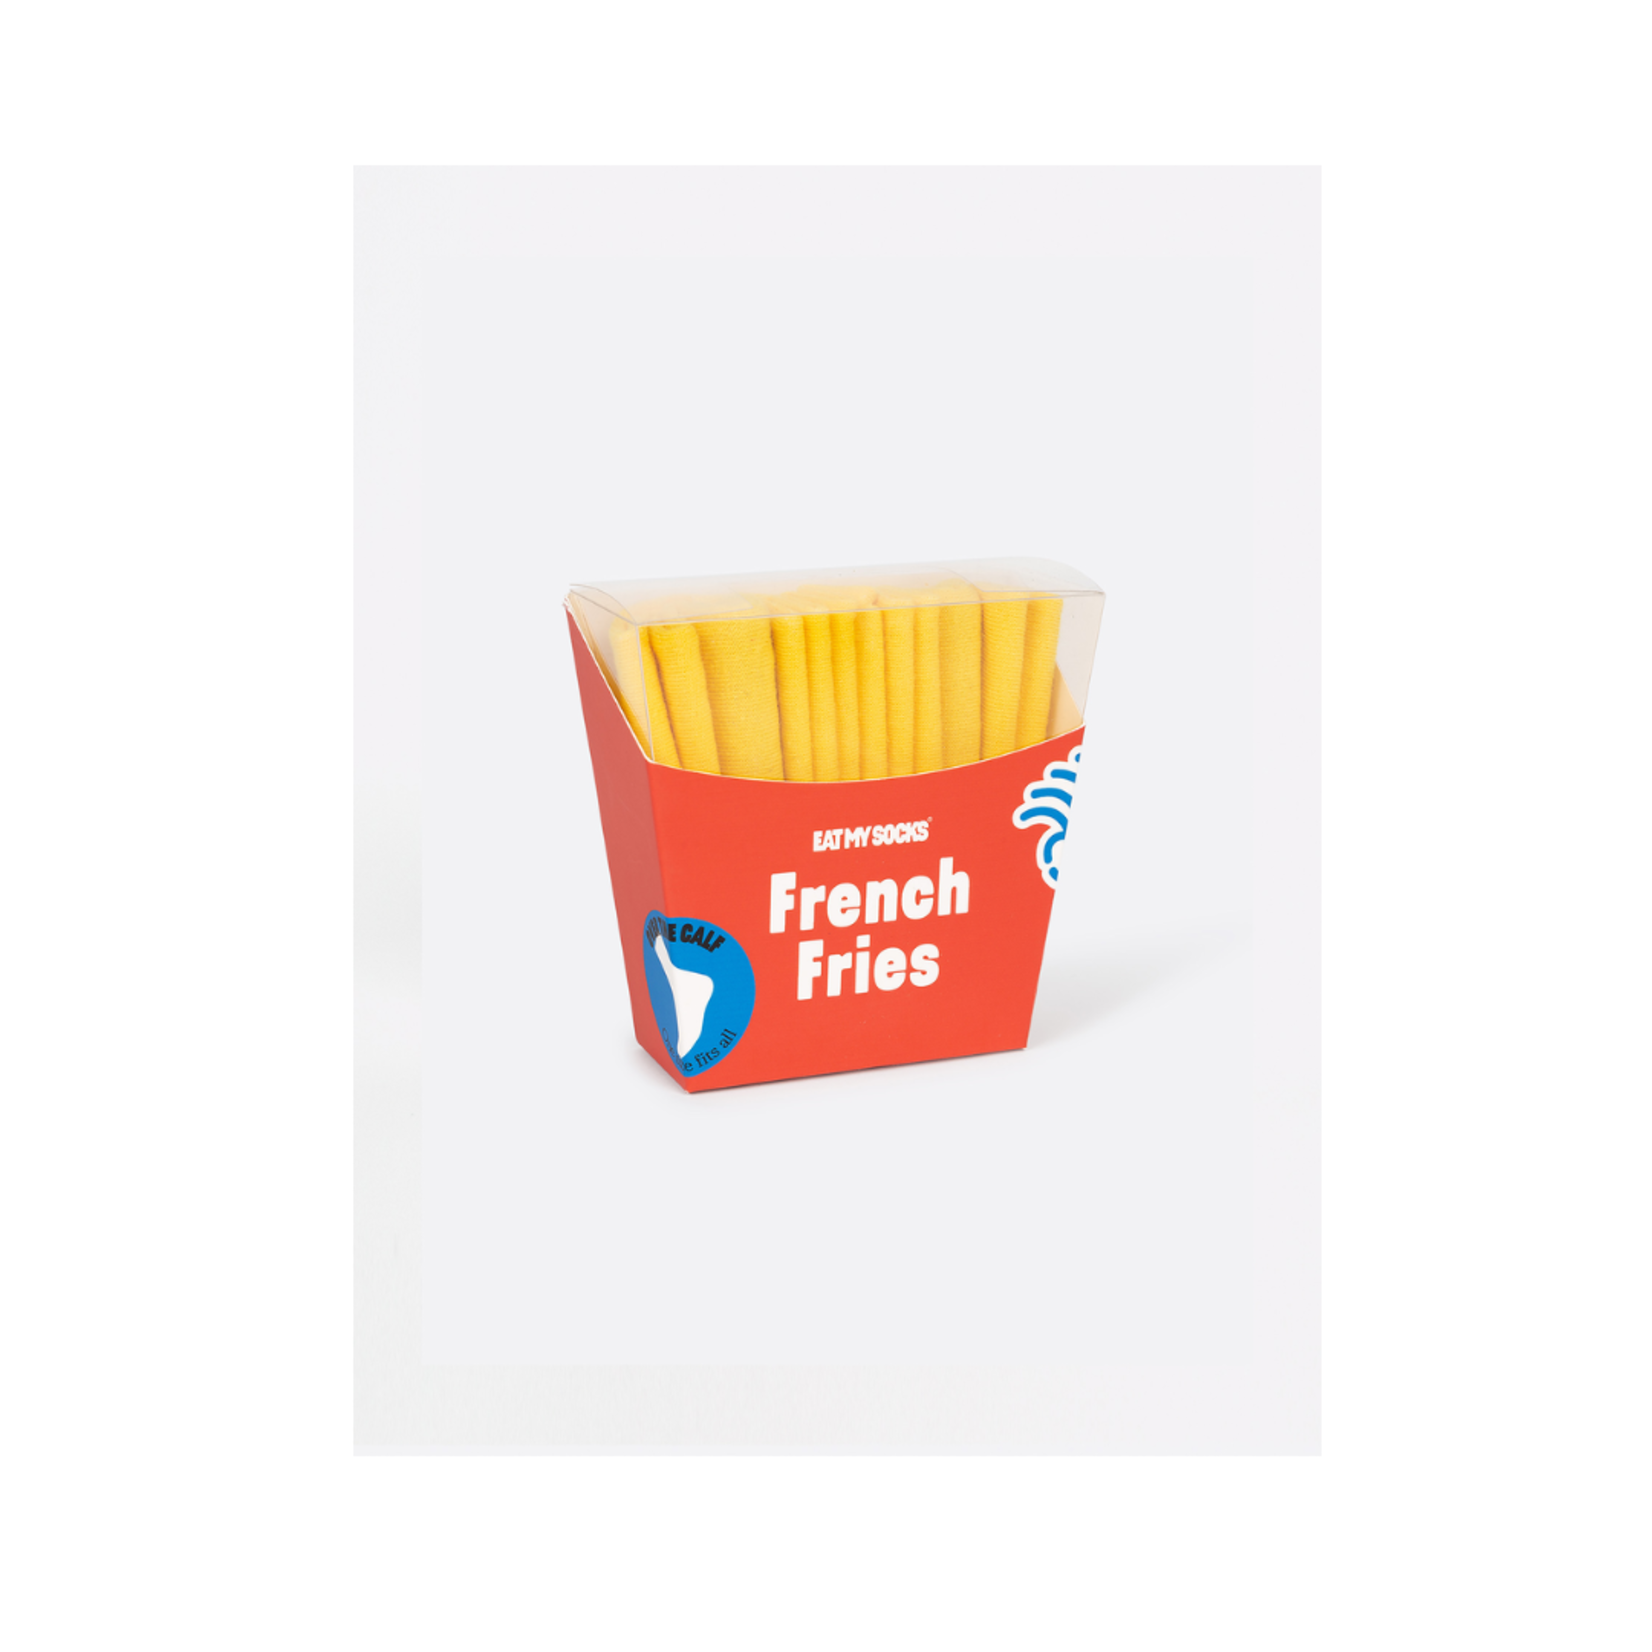 Eat My Socks - French Fries